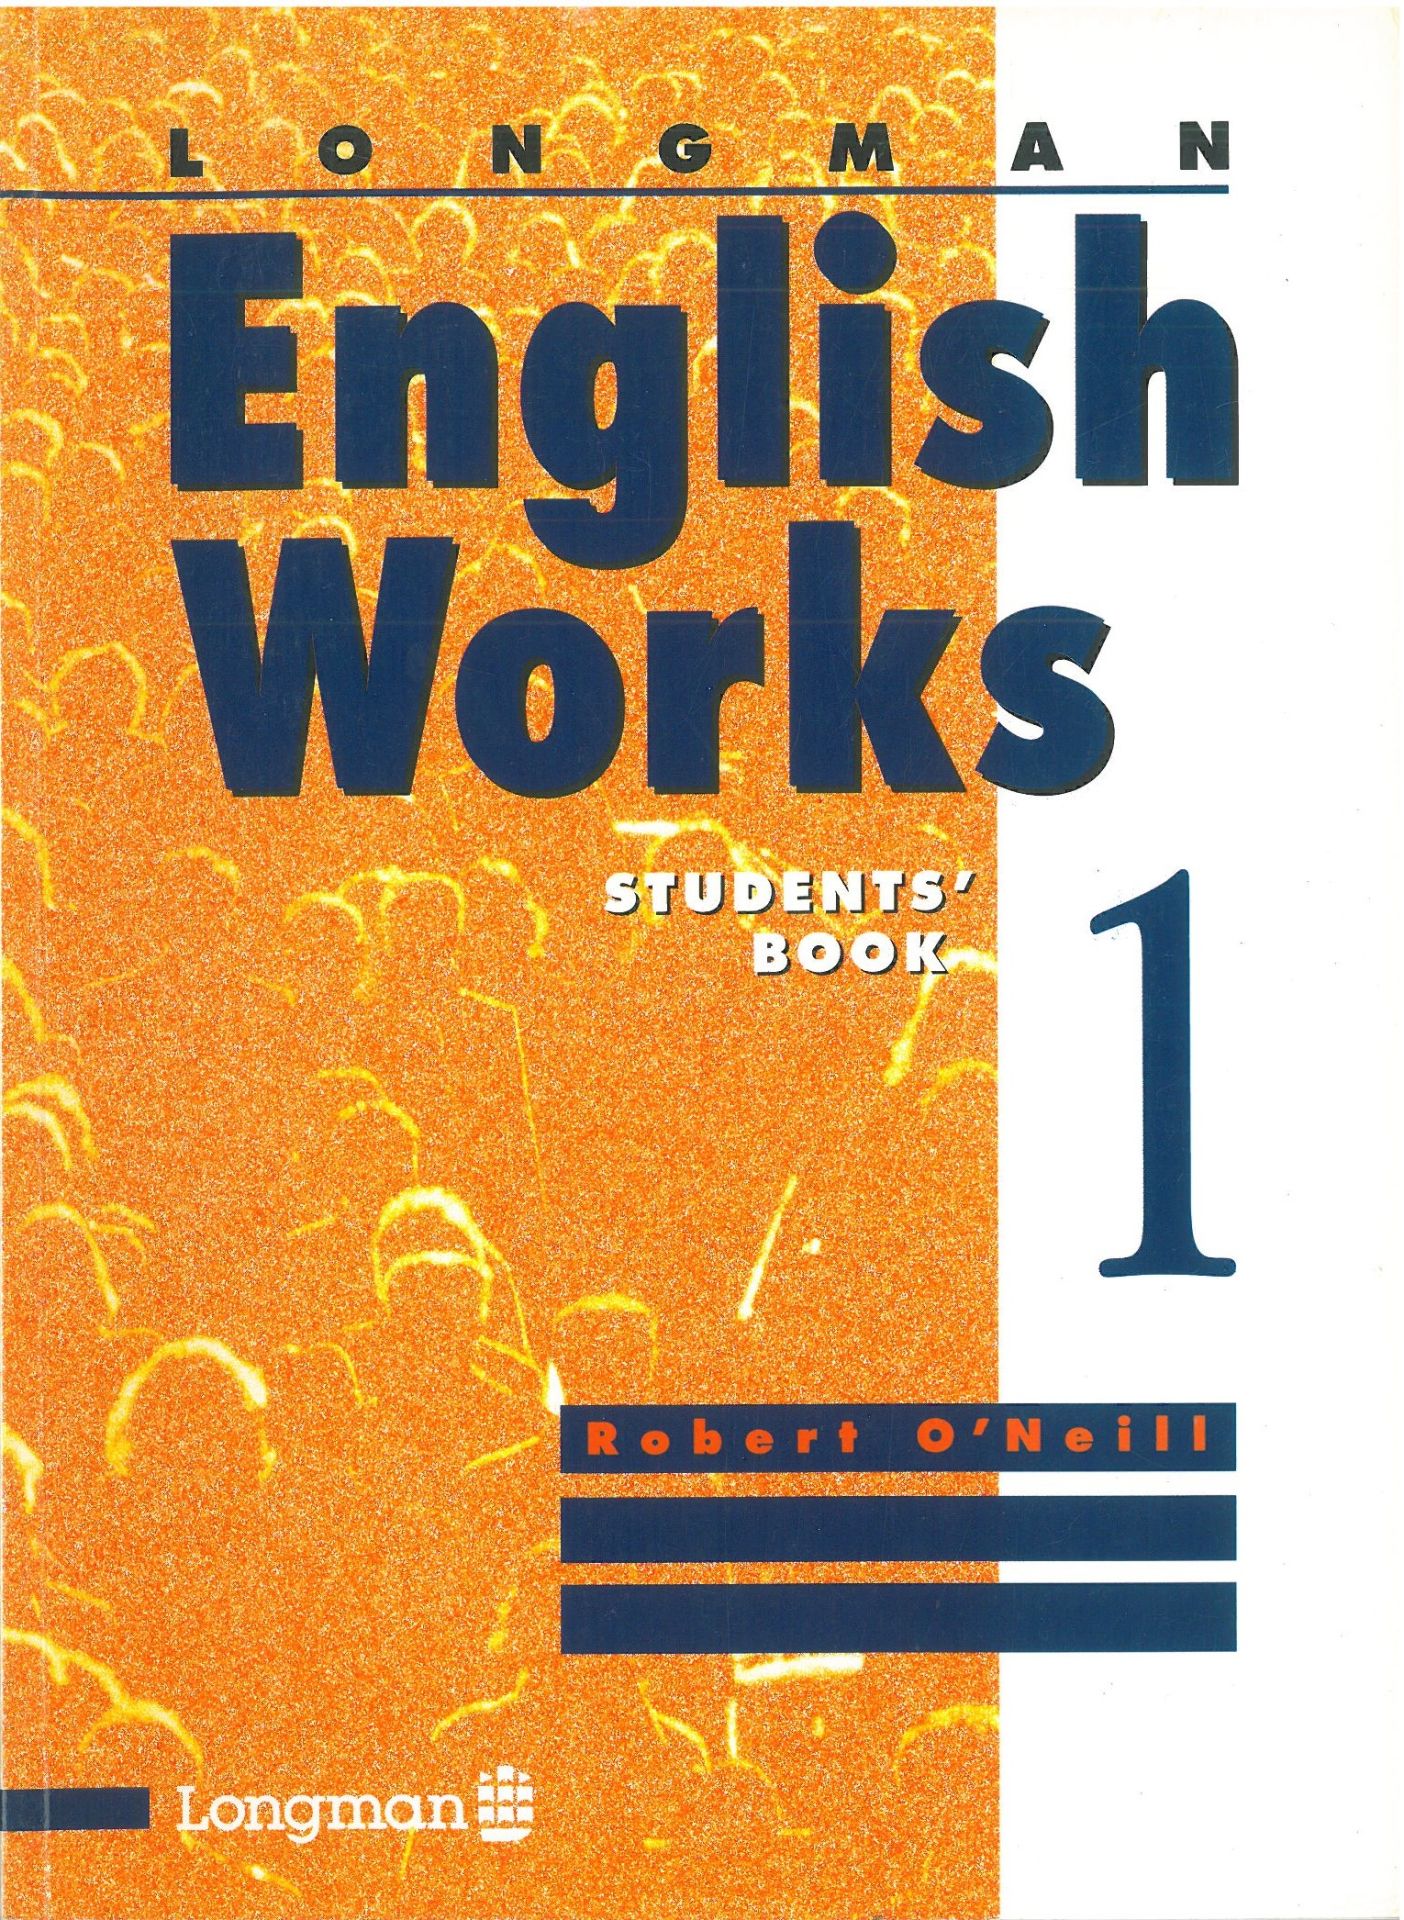 Longman English Works 1 Students Book